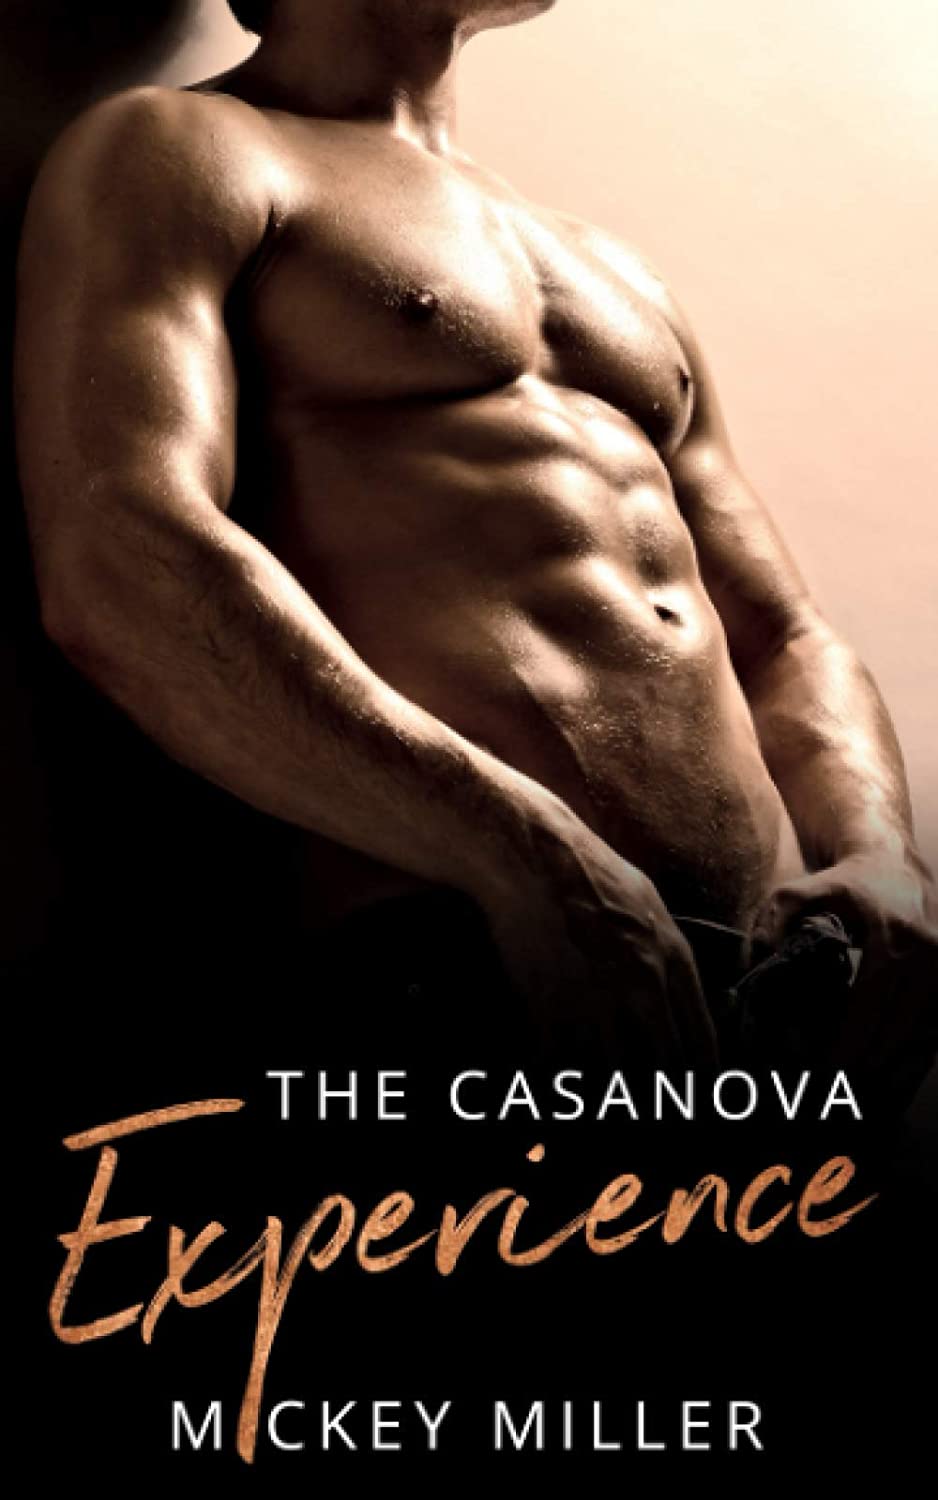 The Casanova Experience: A Friends to Lovers Romance